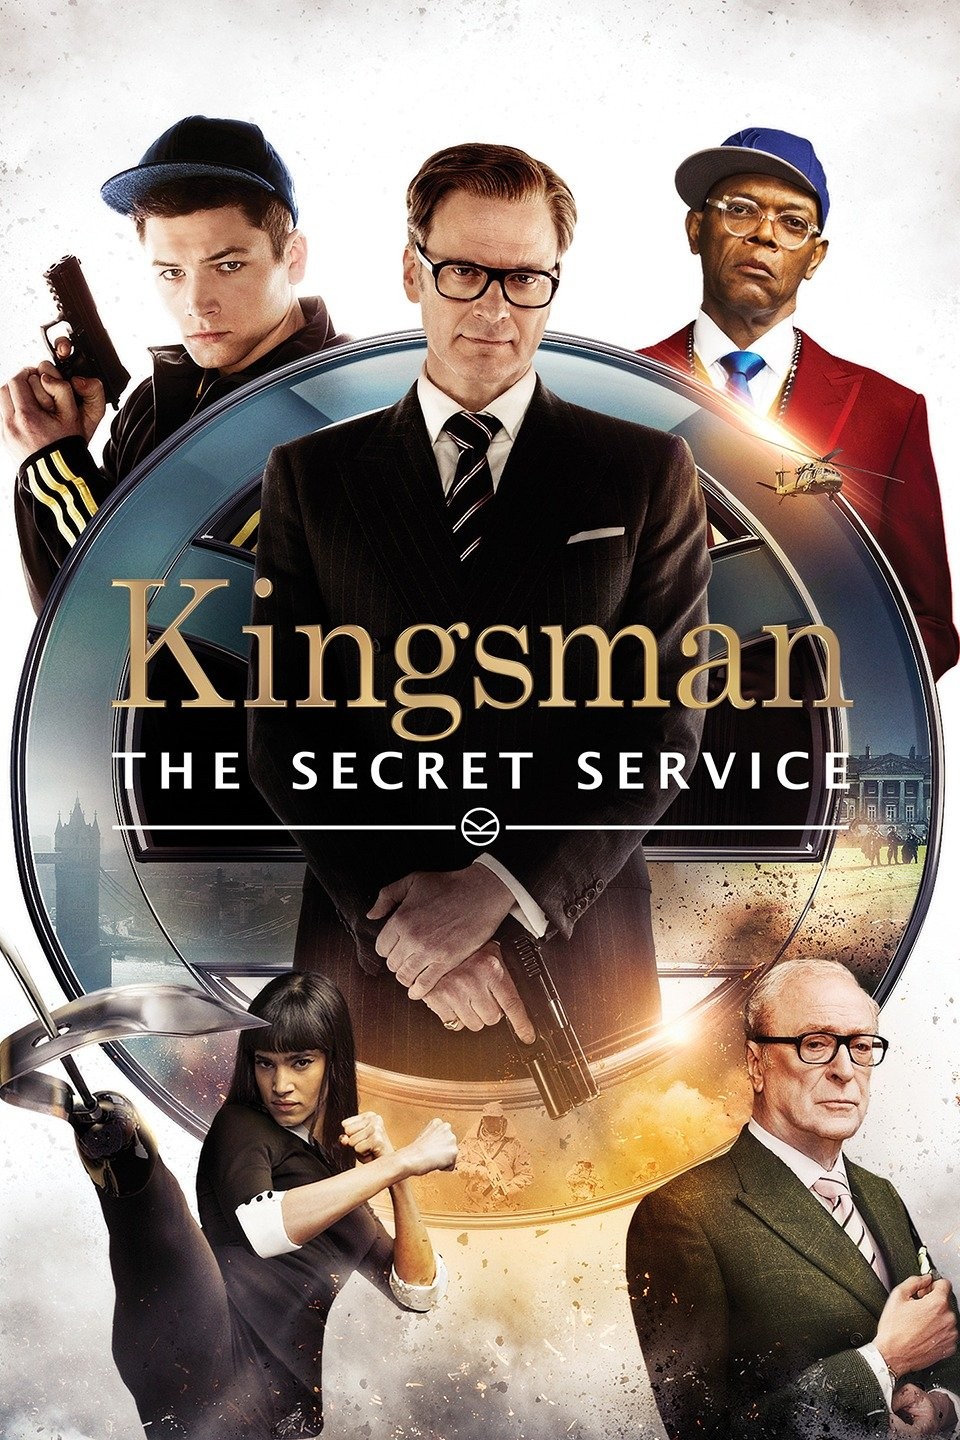 The Secret Service: Kingsman by Mark Millar